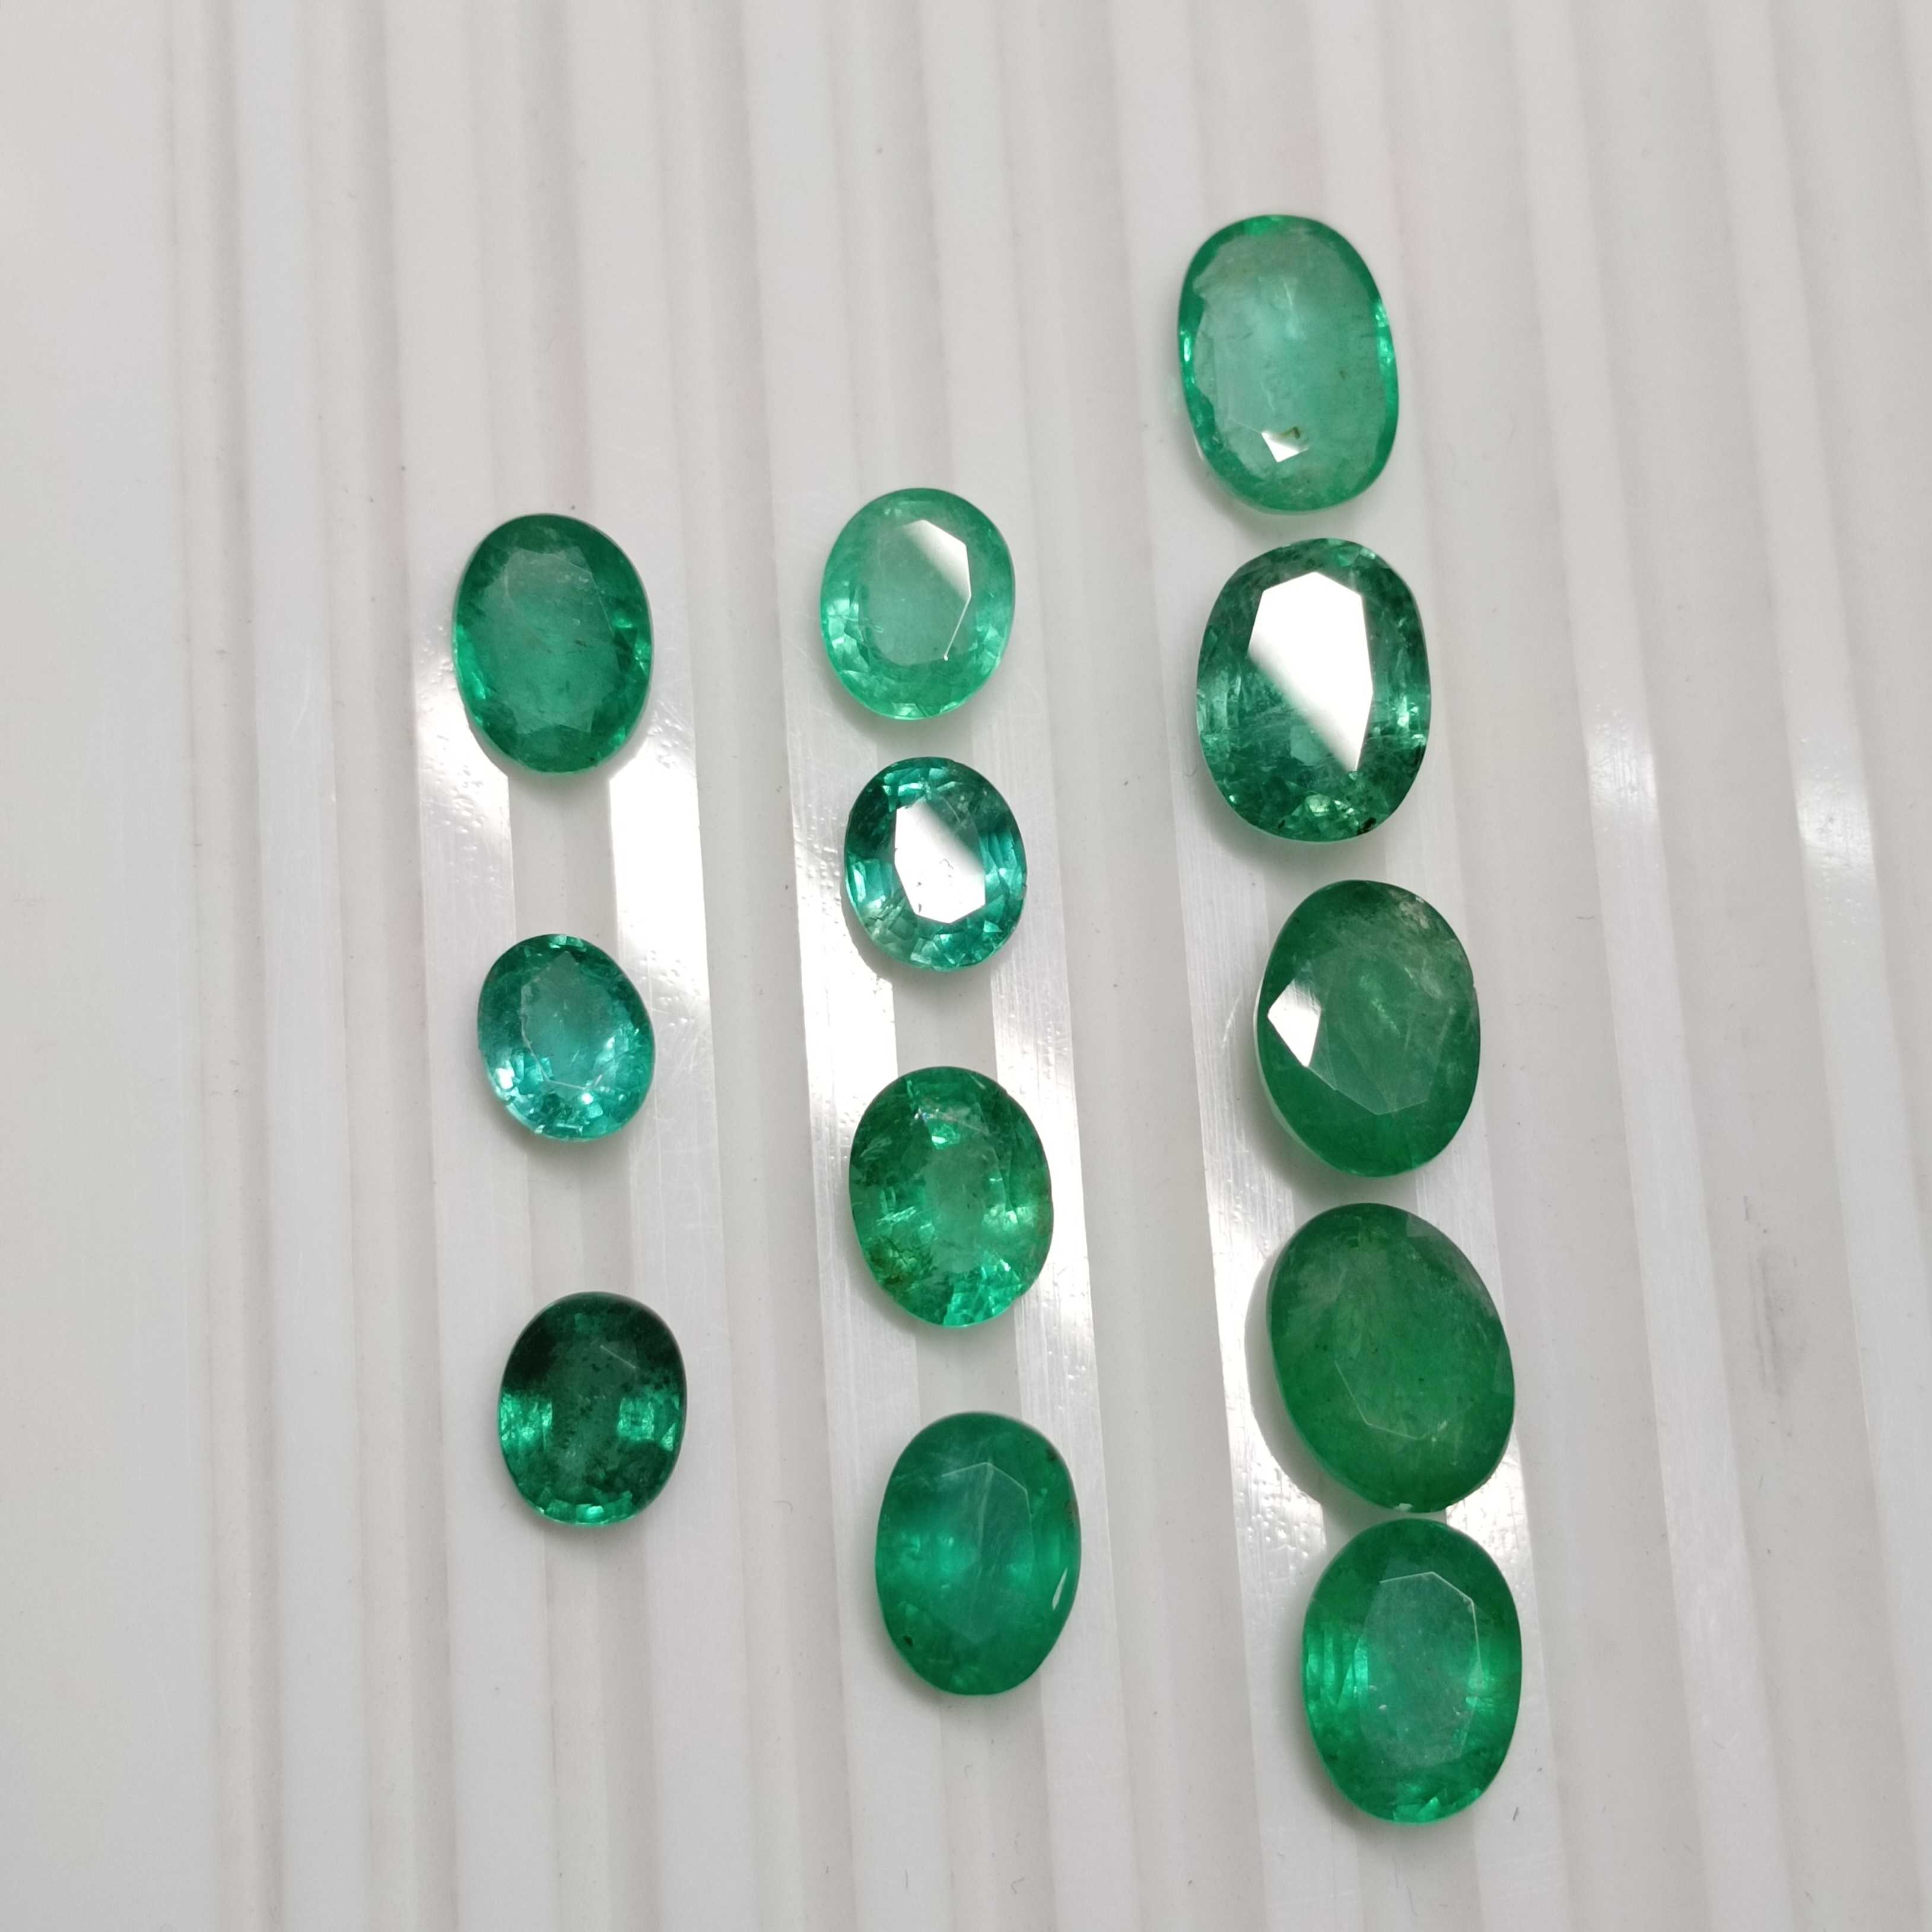 27.63ct medium to deep green oval cut emerald parcel /